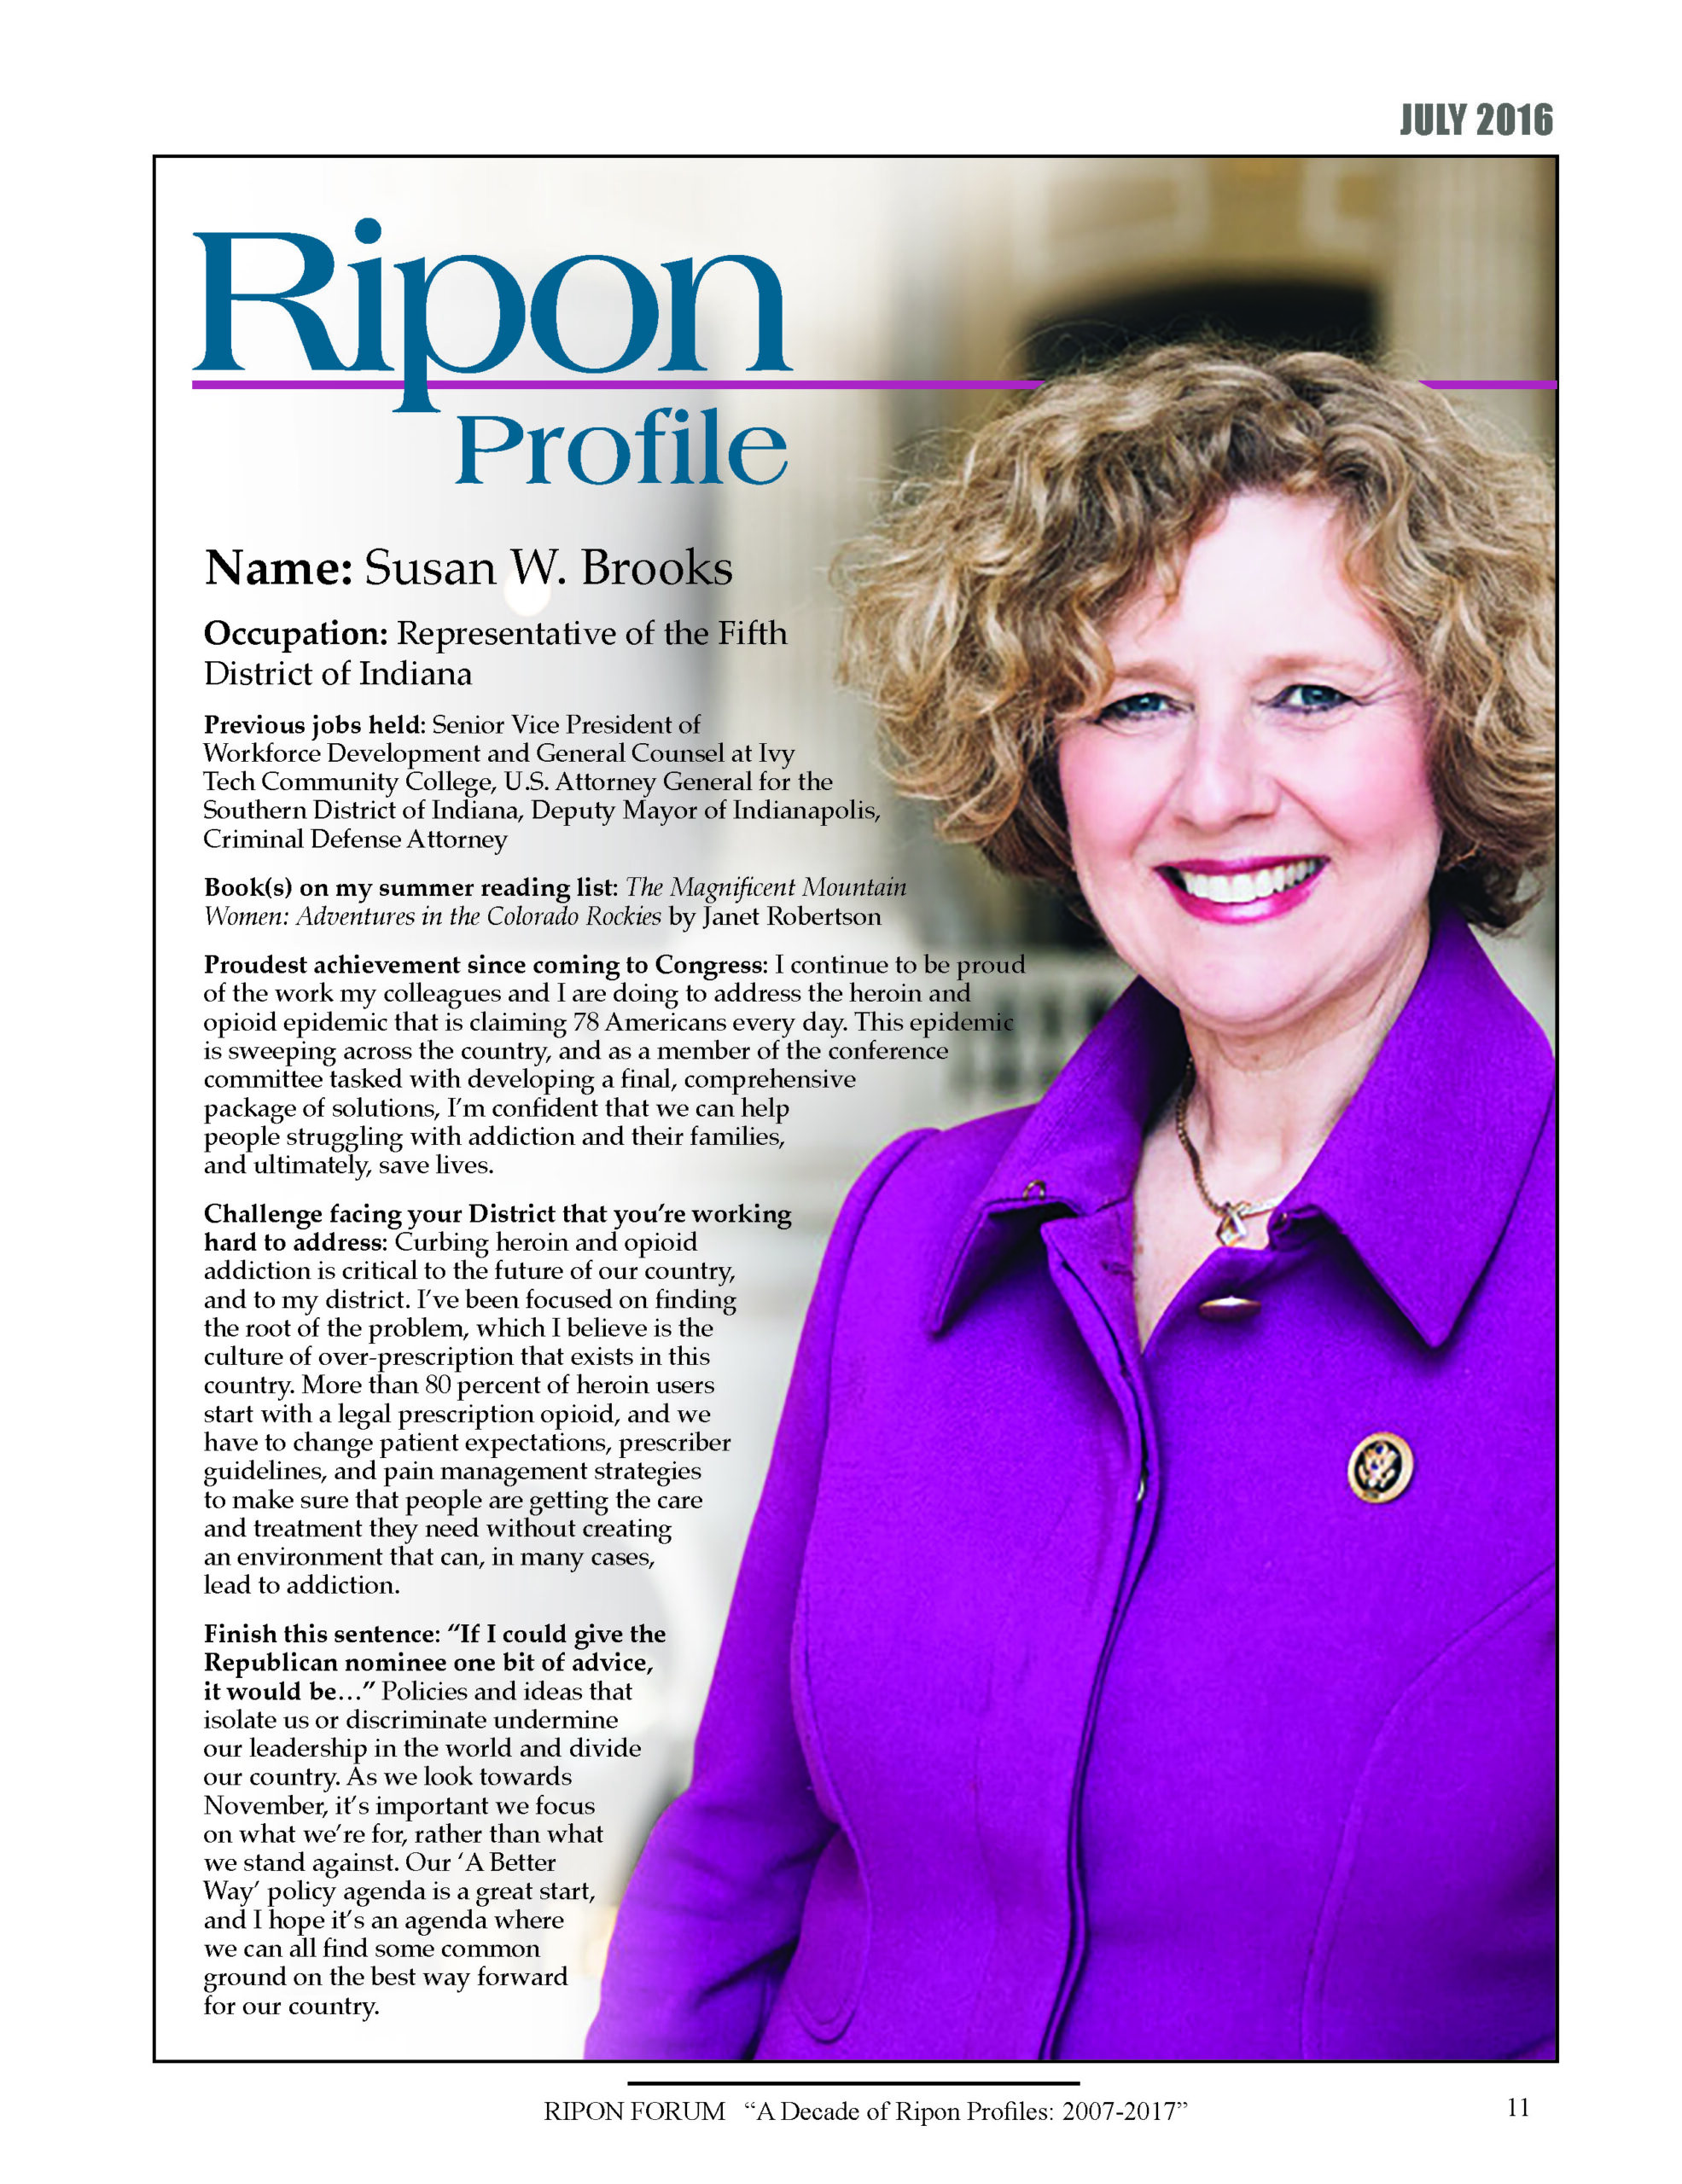 Ripon Profile of Susan W. Brooks